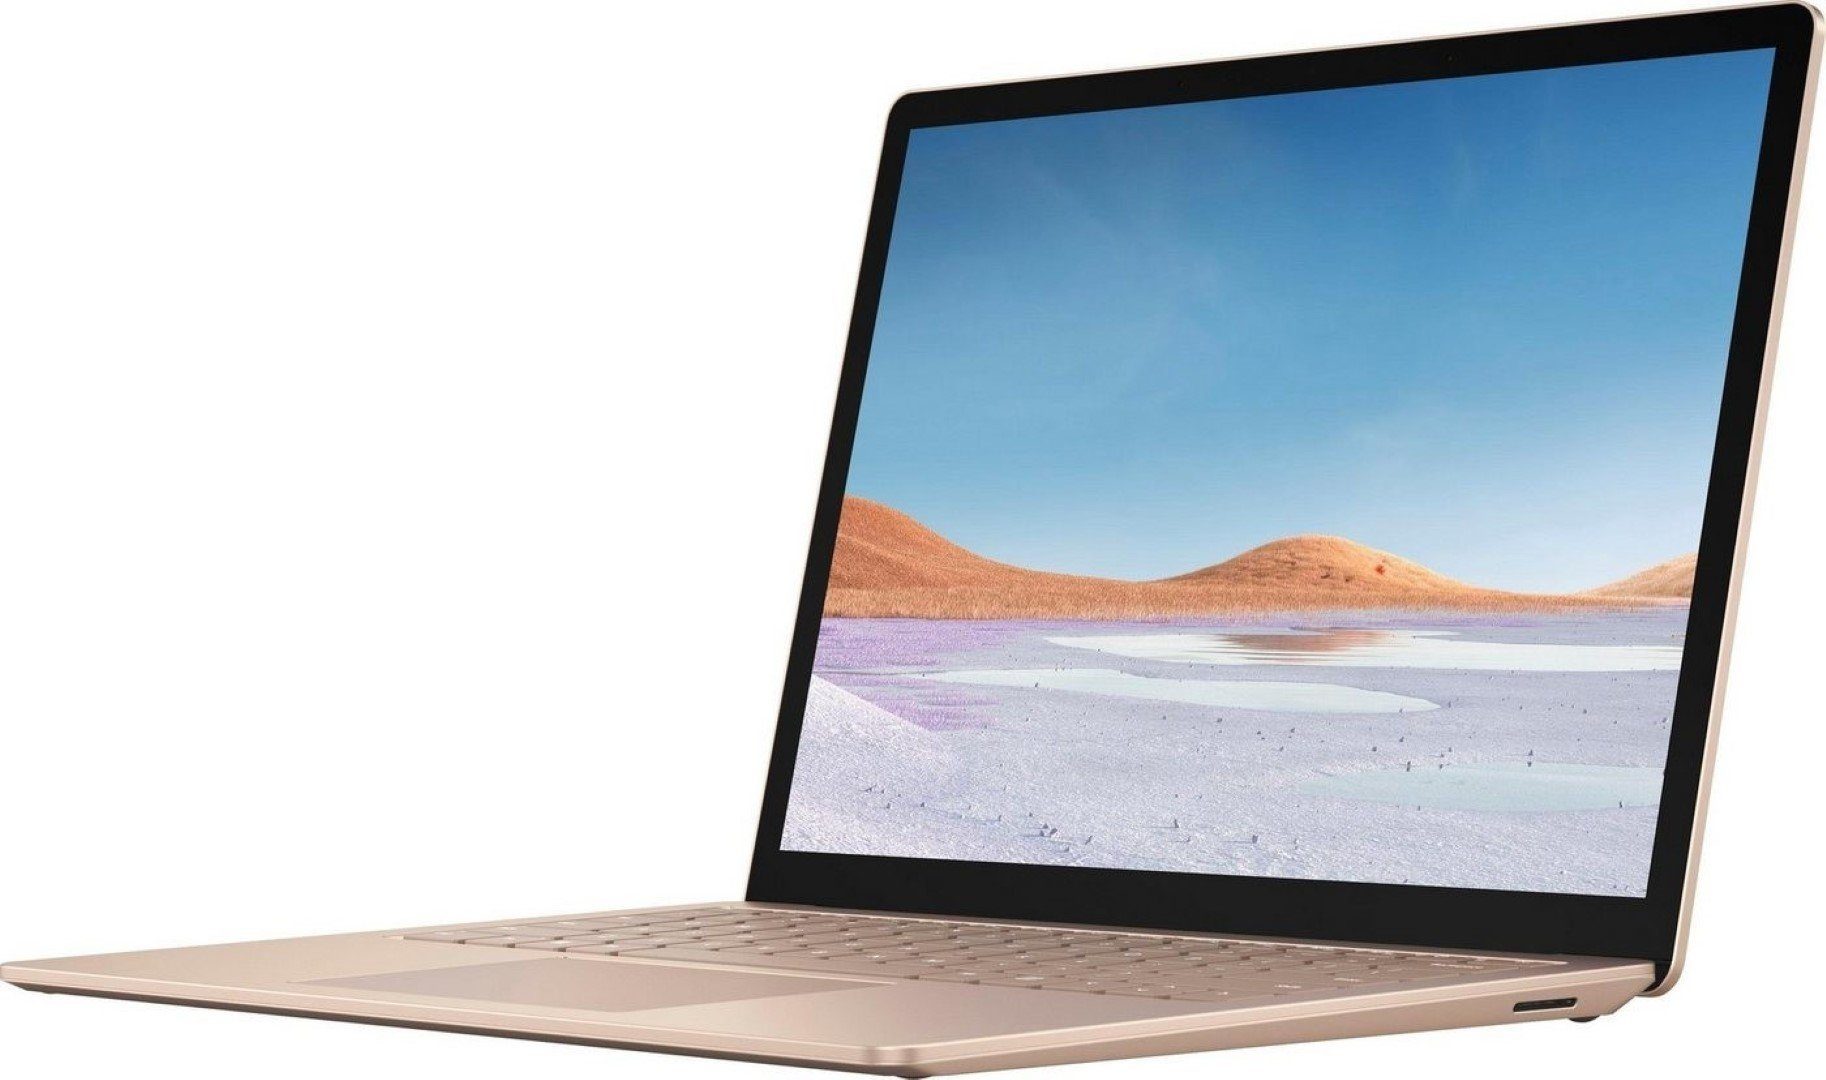 Microsoft Microsoft Surface Laptop 3 - 34,3 cm (13,5 Zoll) Notebook (Intel  i5-1035G7, Intel Iris Plus-Grafik, 256 GB HDD) online kaufen | OTTO